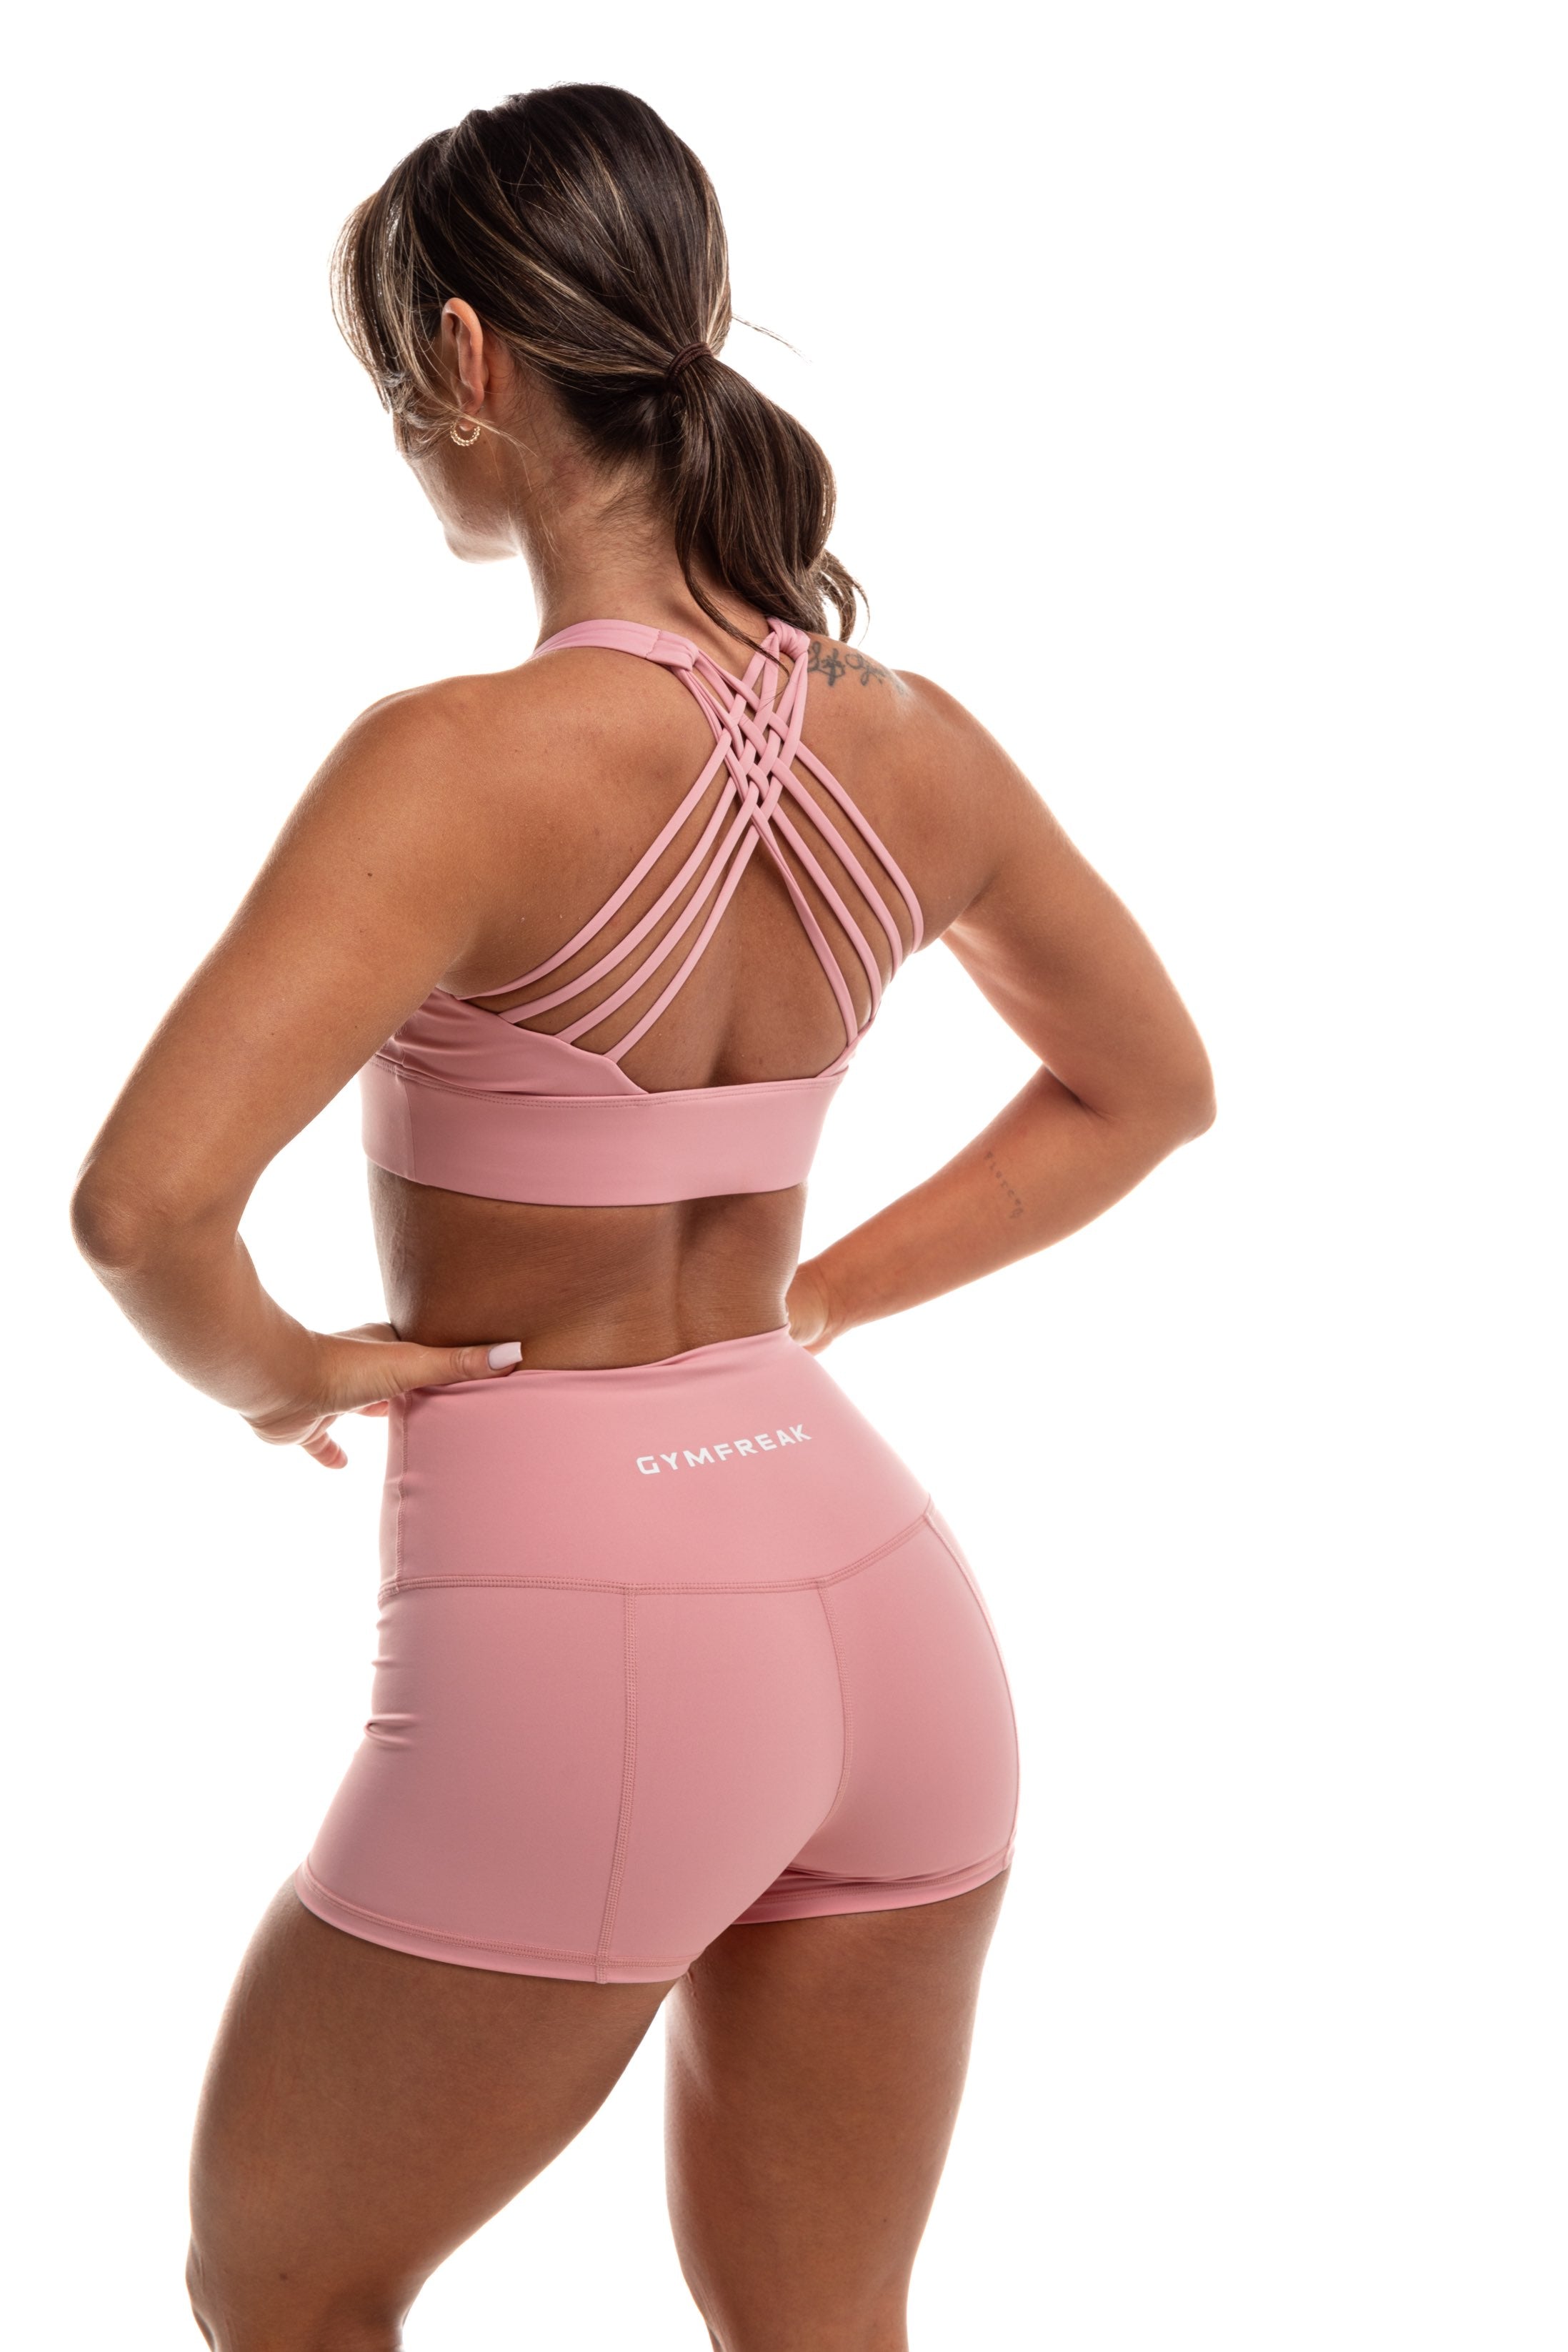 GymFreak Women's Vision Shorts - 2 inch Pink